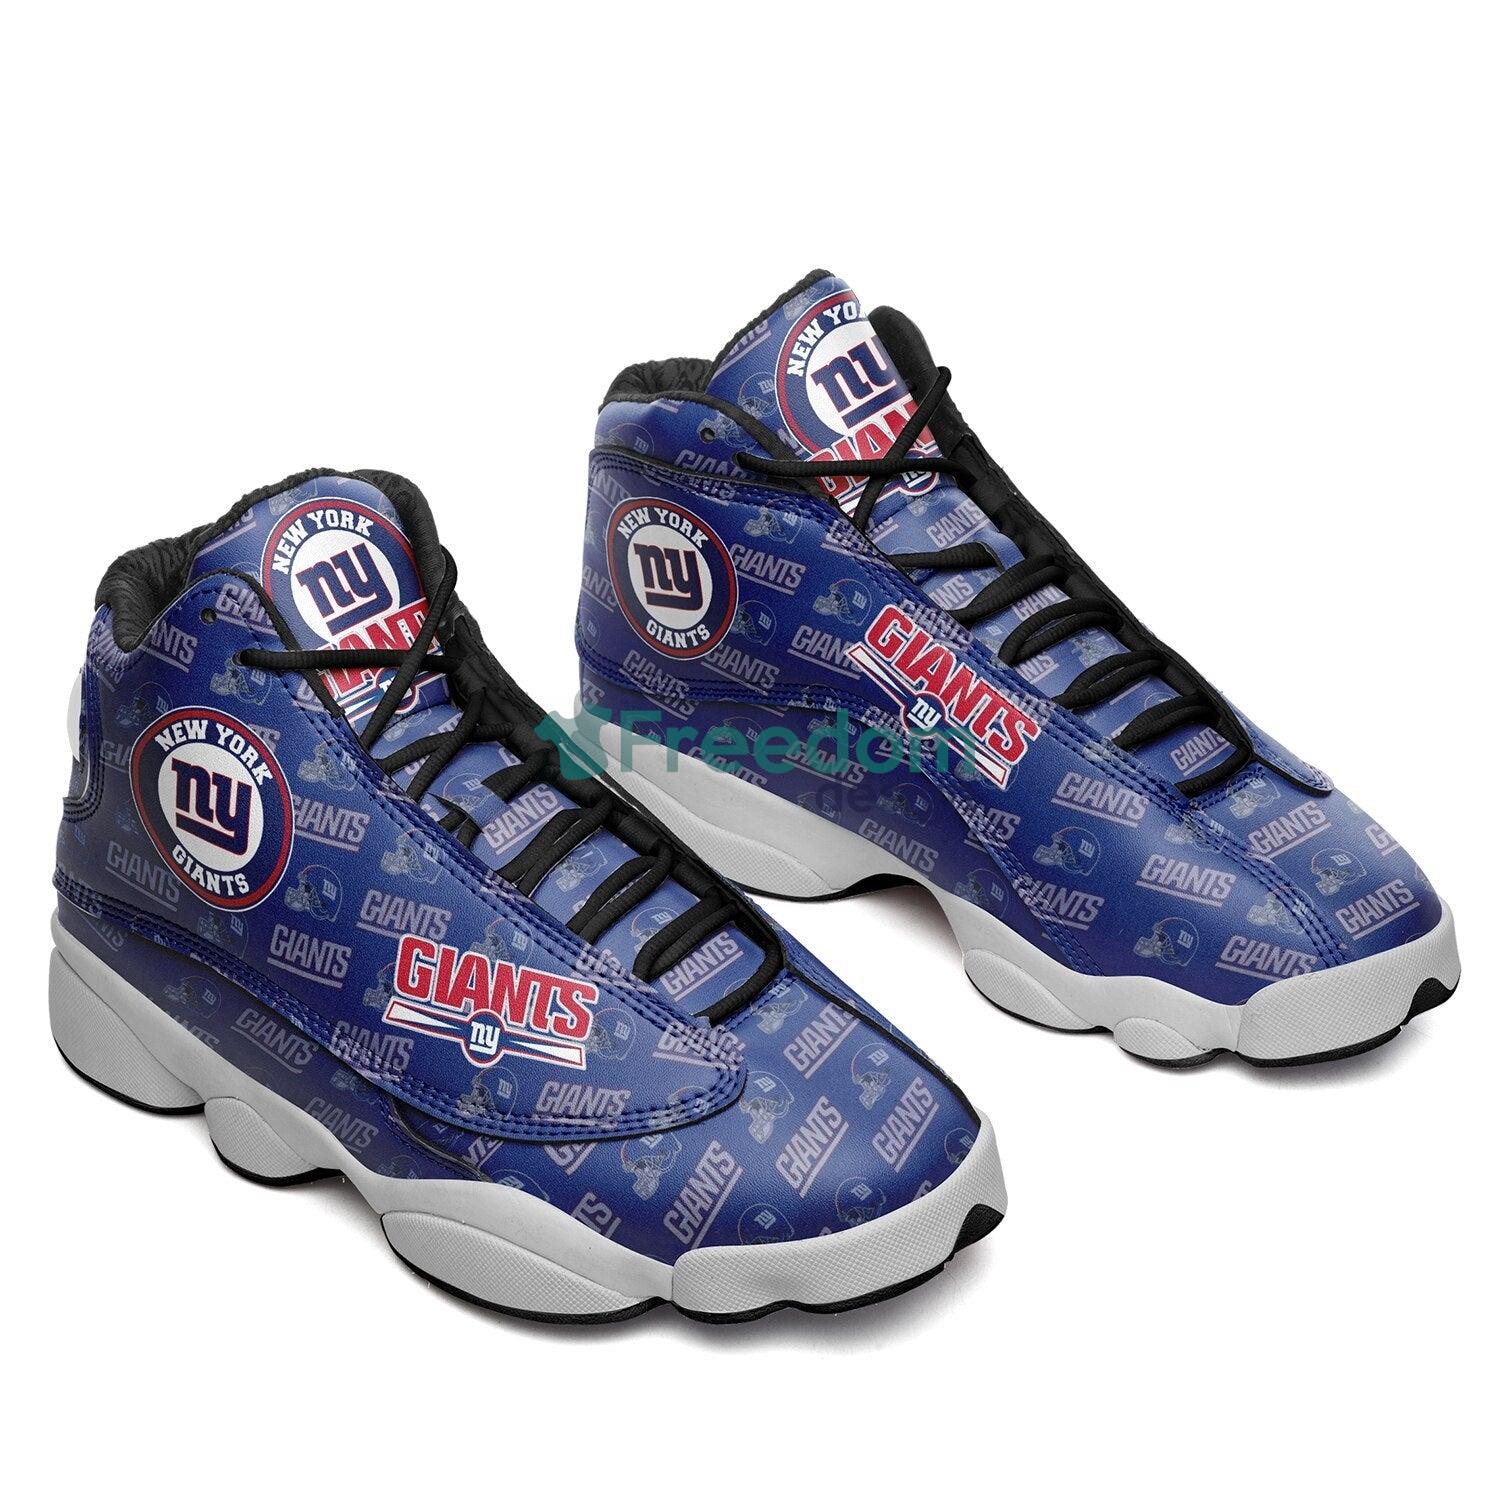 New York Giants Team Air Jordan 13 Shoes For Fans